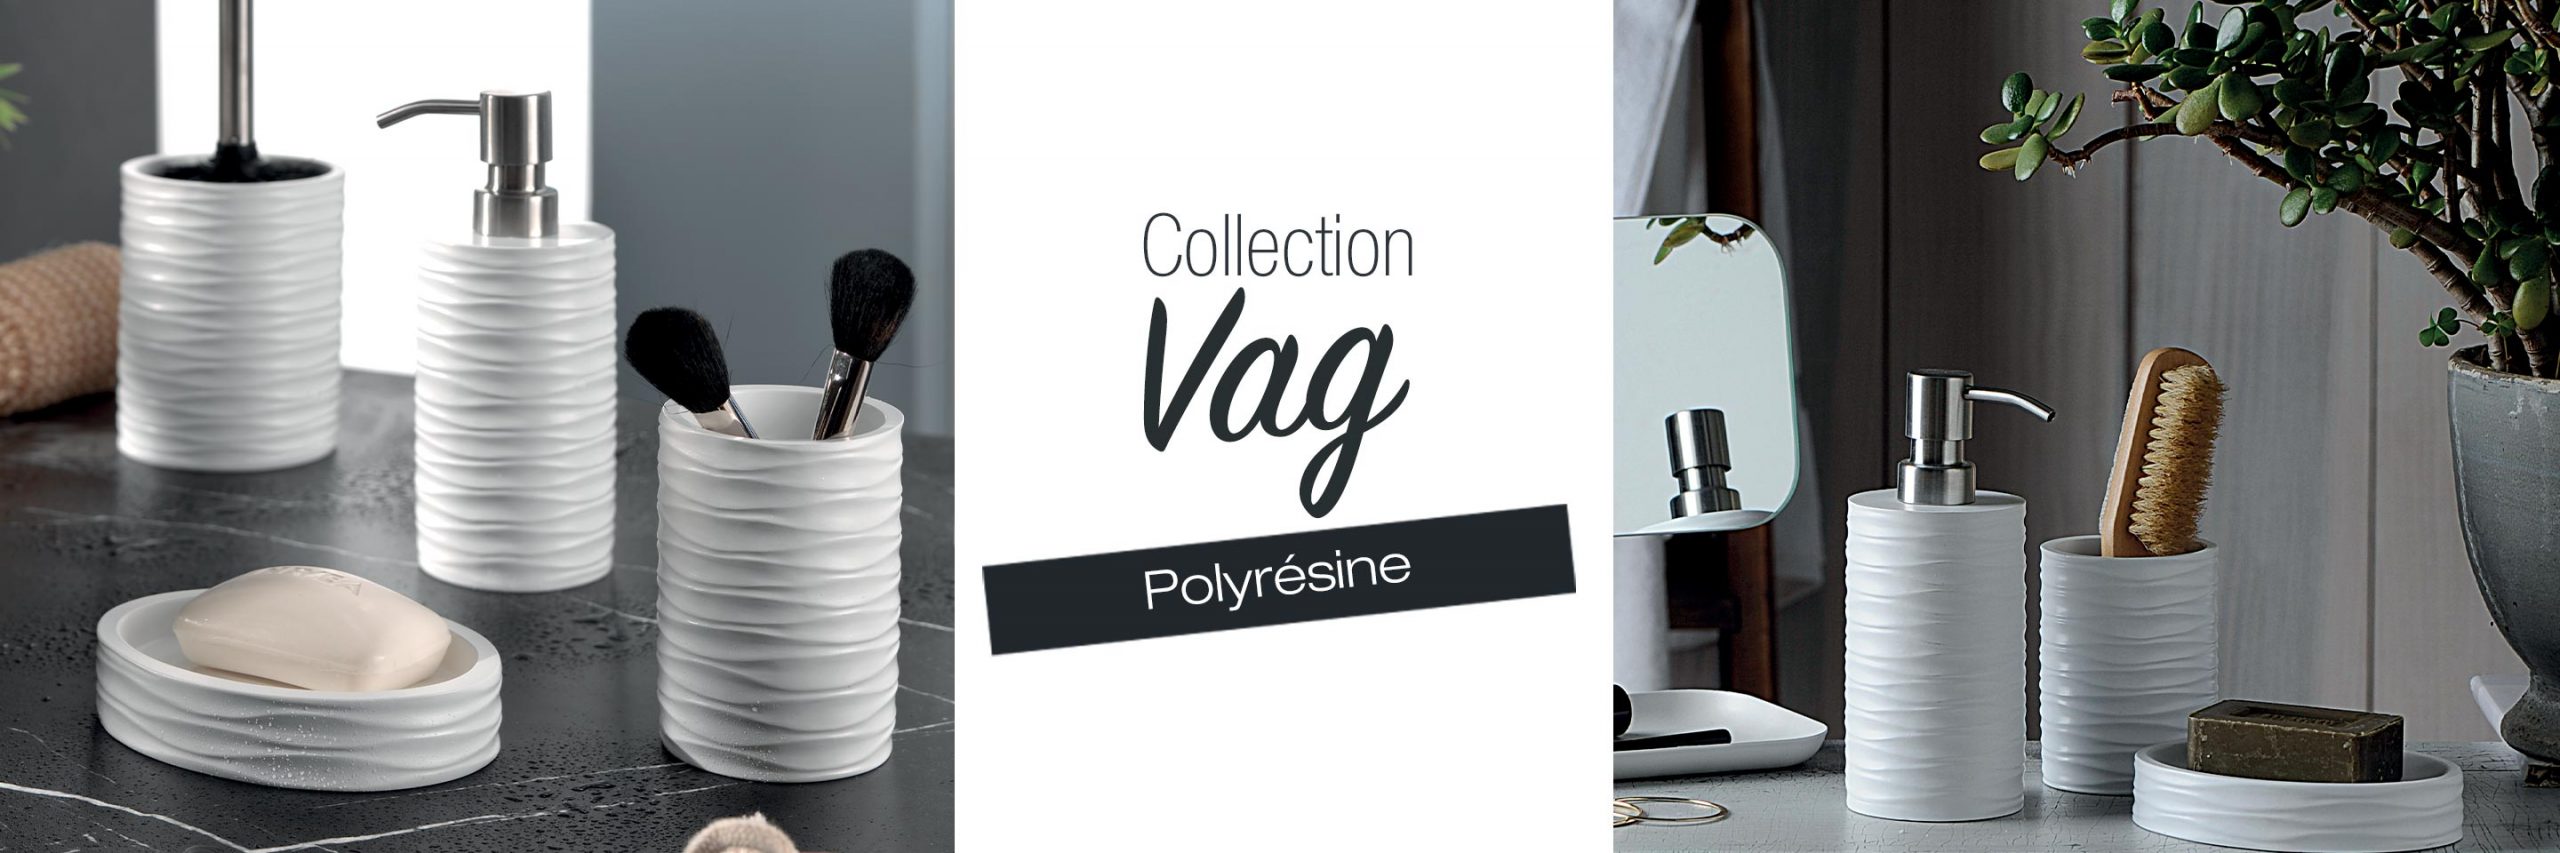 Collection VAG polyrésine blanche